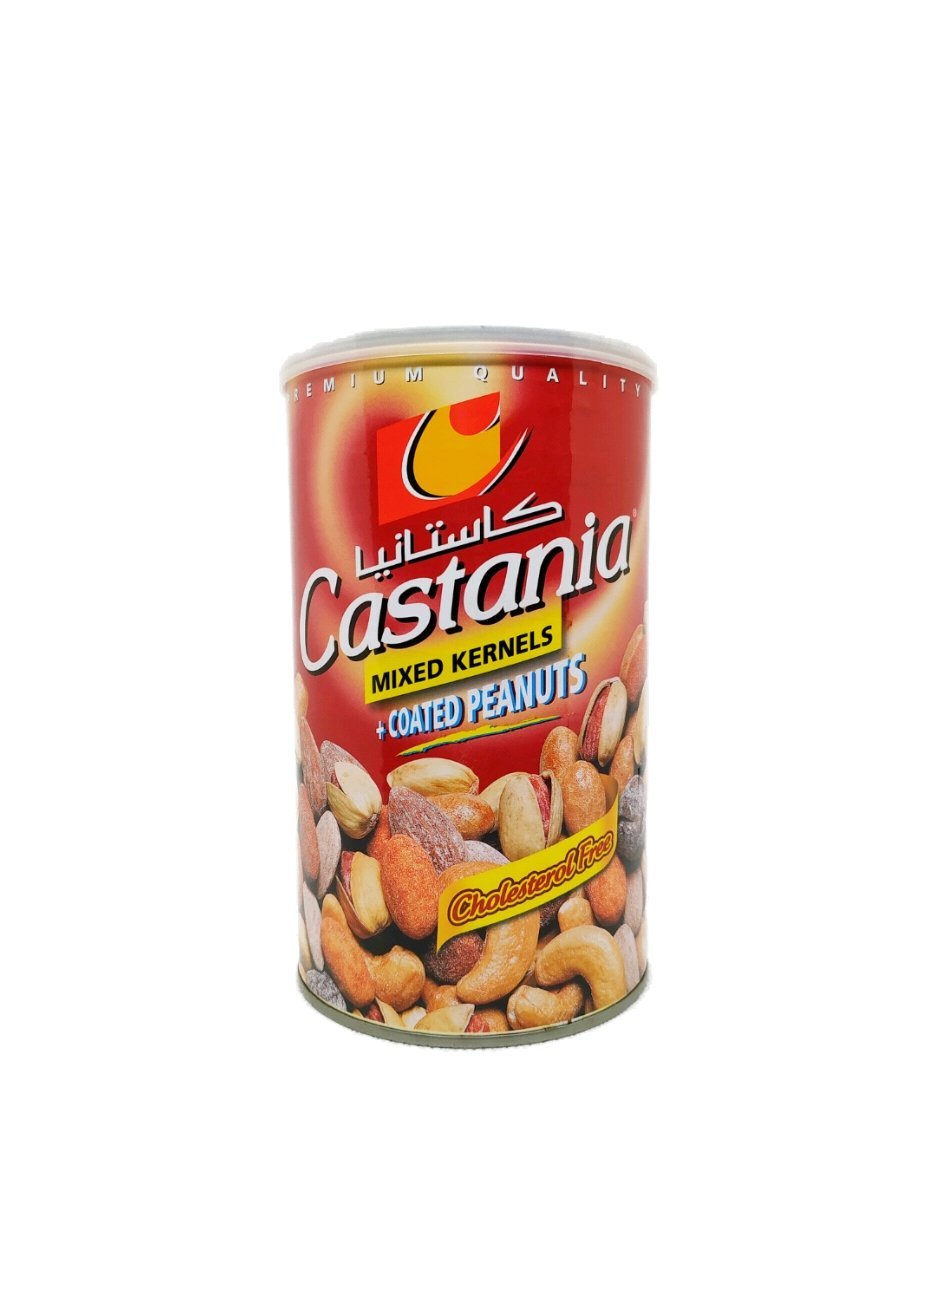 Produits orientaux en ligne : Castania - Mixed kernels + coated peanuts